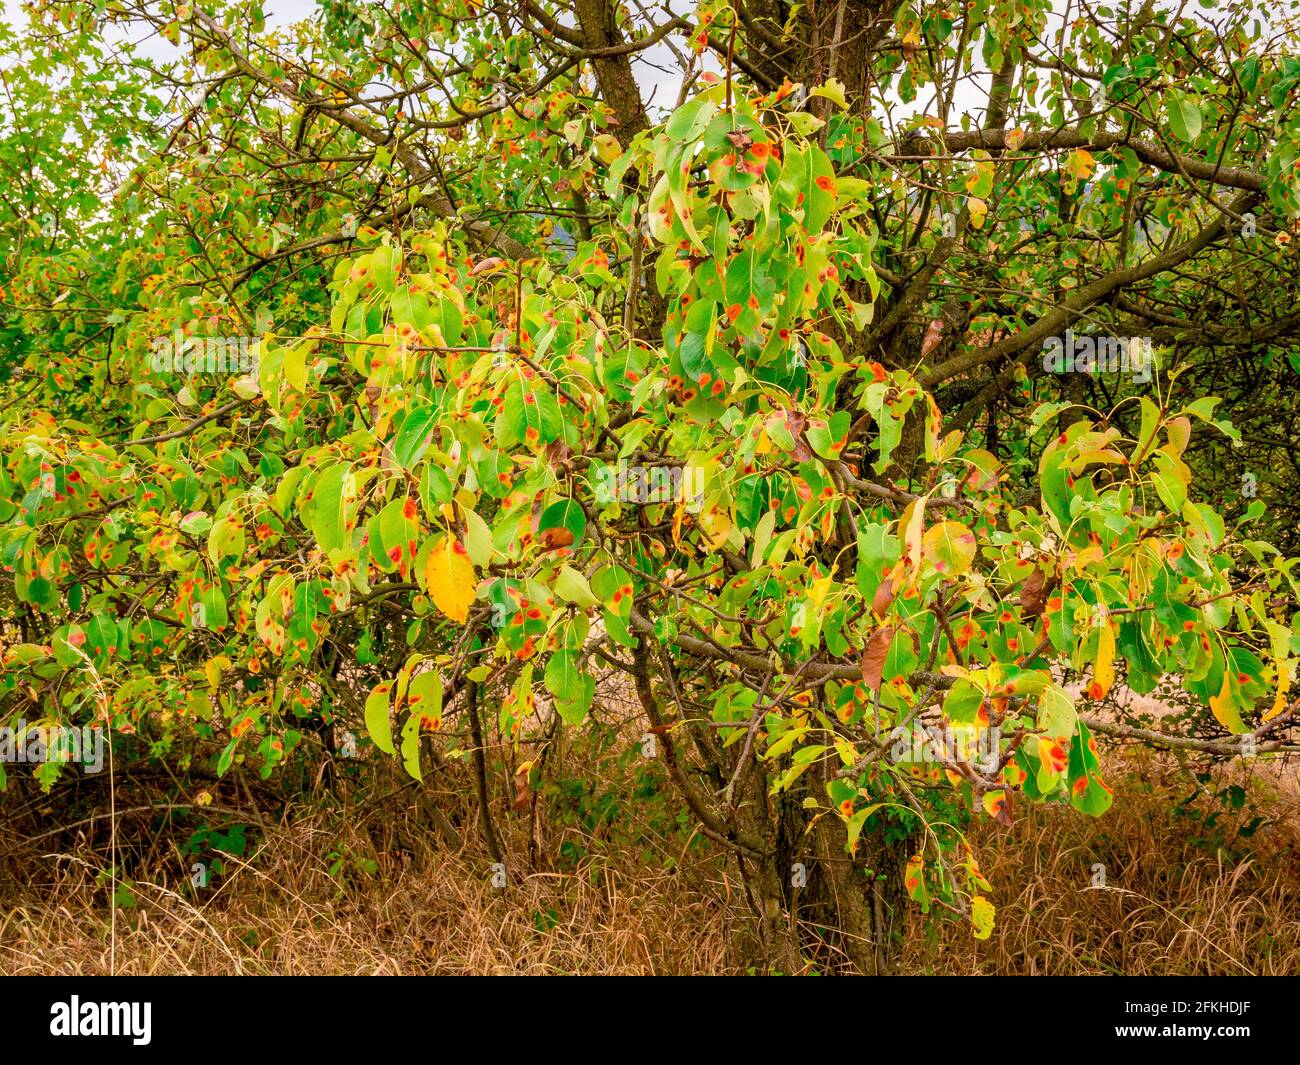 European pear rust (Gymnosporangium sabinae) disease of pears. Identifiable by orange spots on leaves. Stock Photo